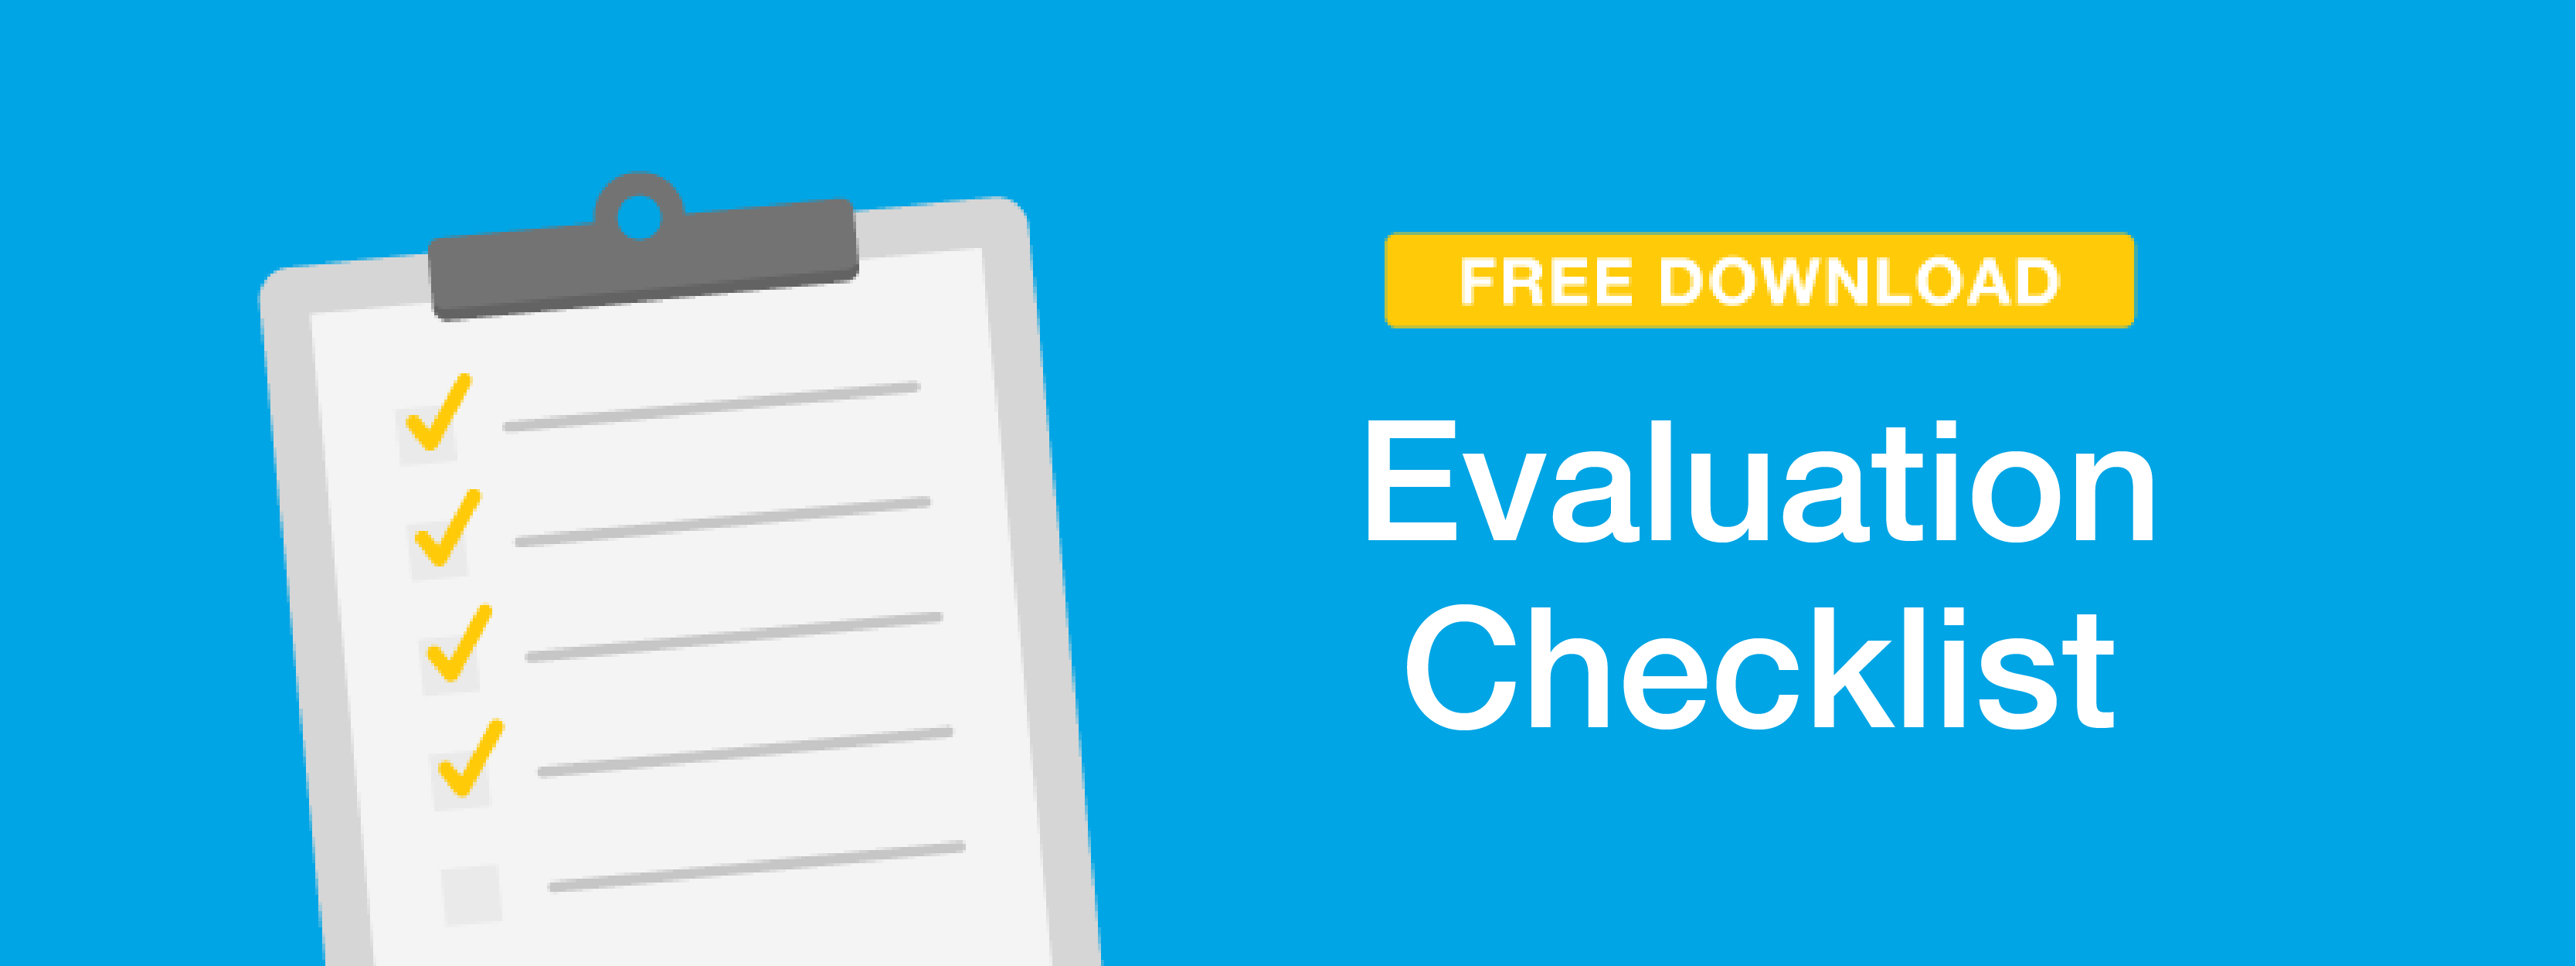 Free_Download_Evaluation_Checklist